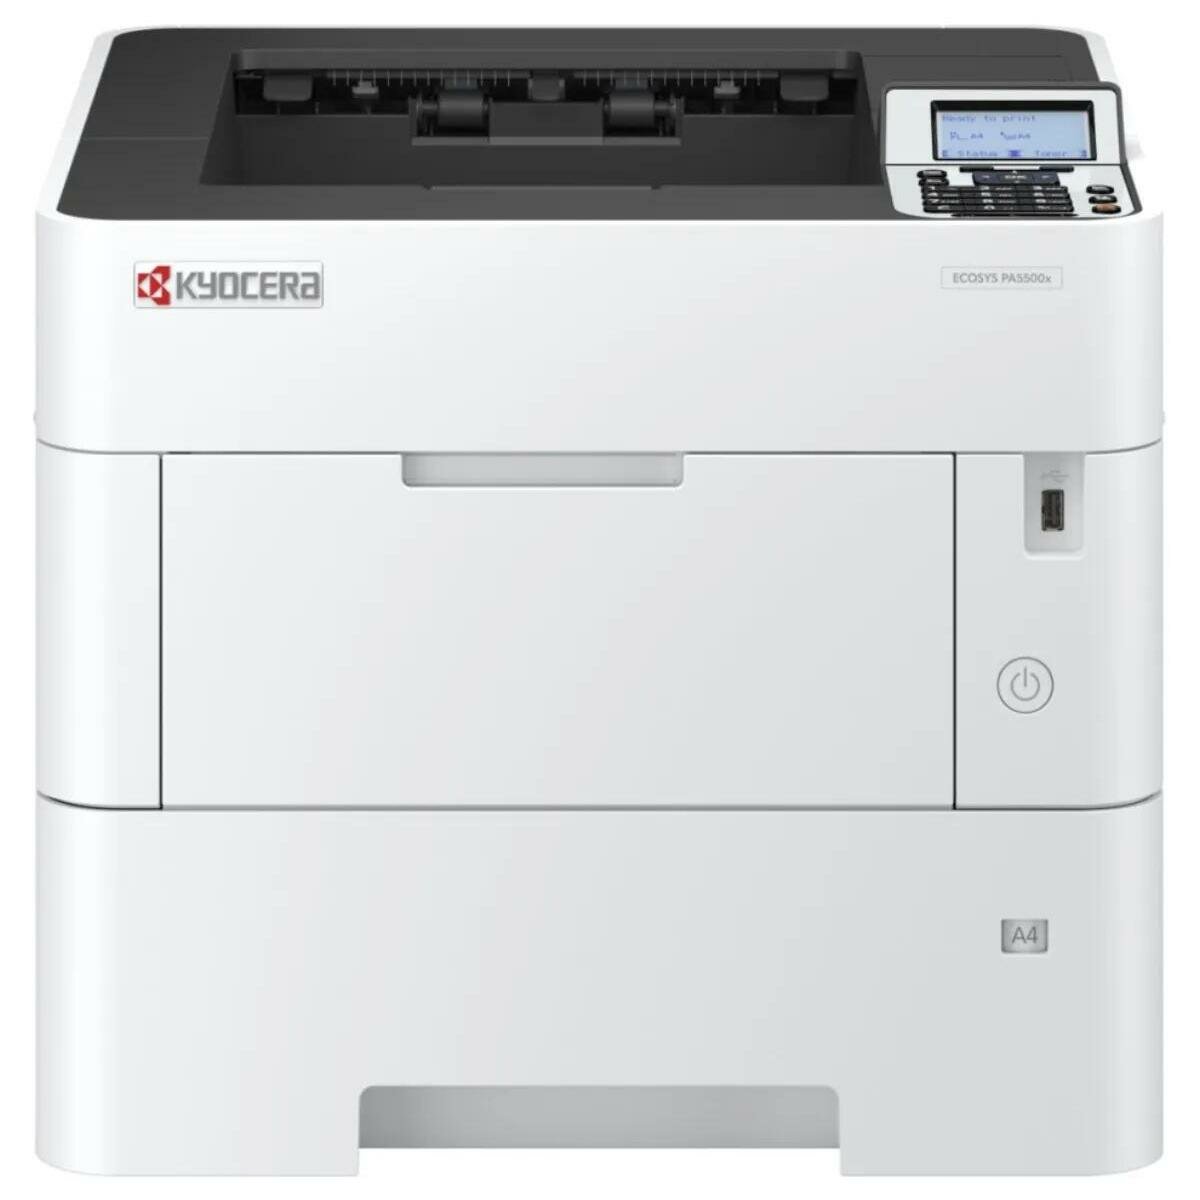 Kyocera ECOSYS PA5500x, Laser SFU Printer, A4 (NI) 1102S33NL0